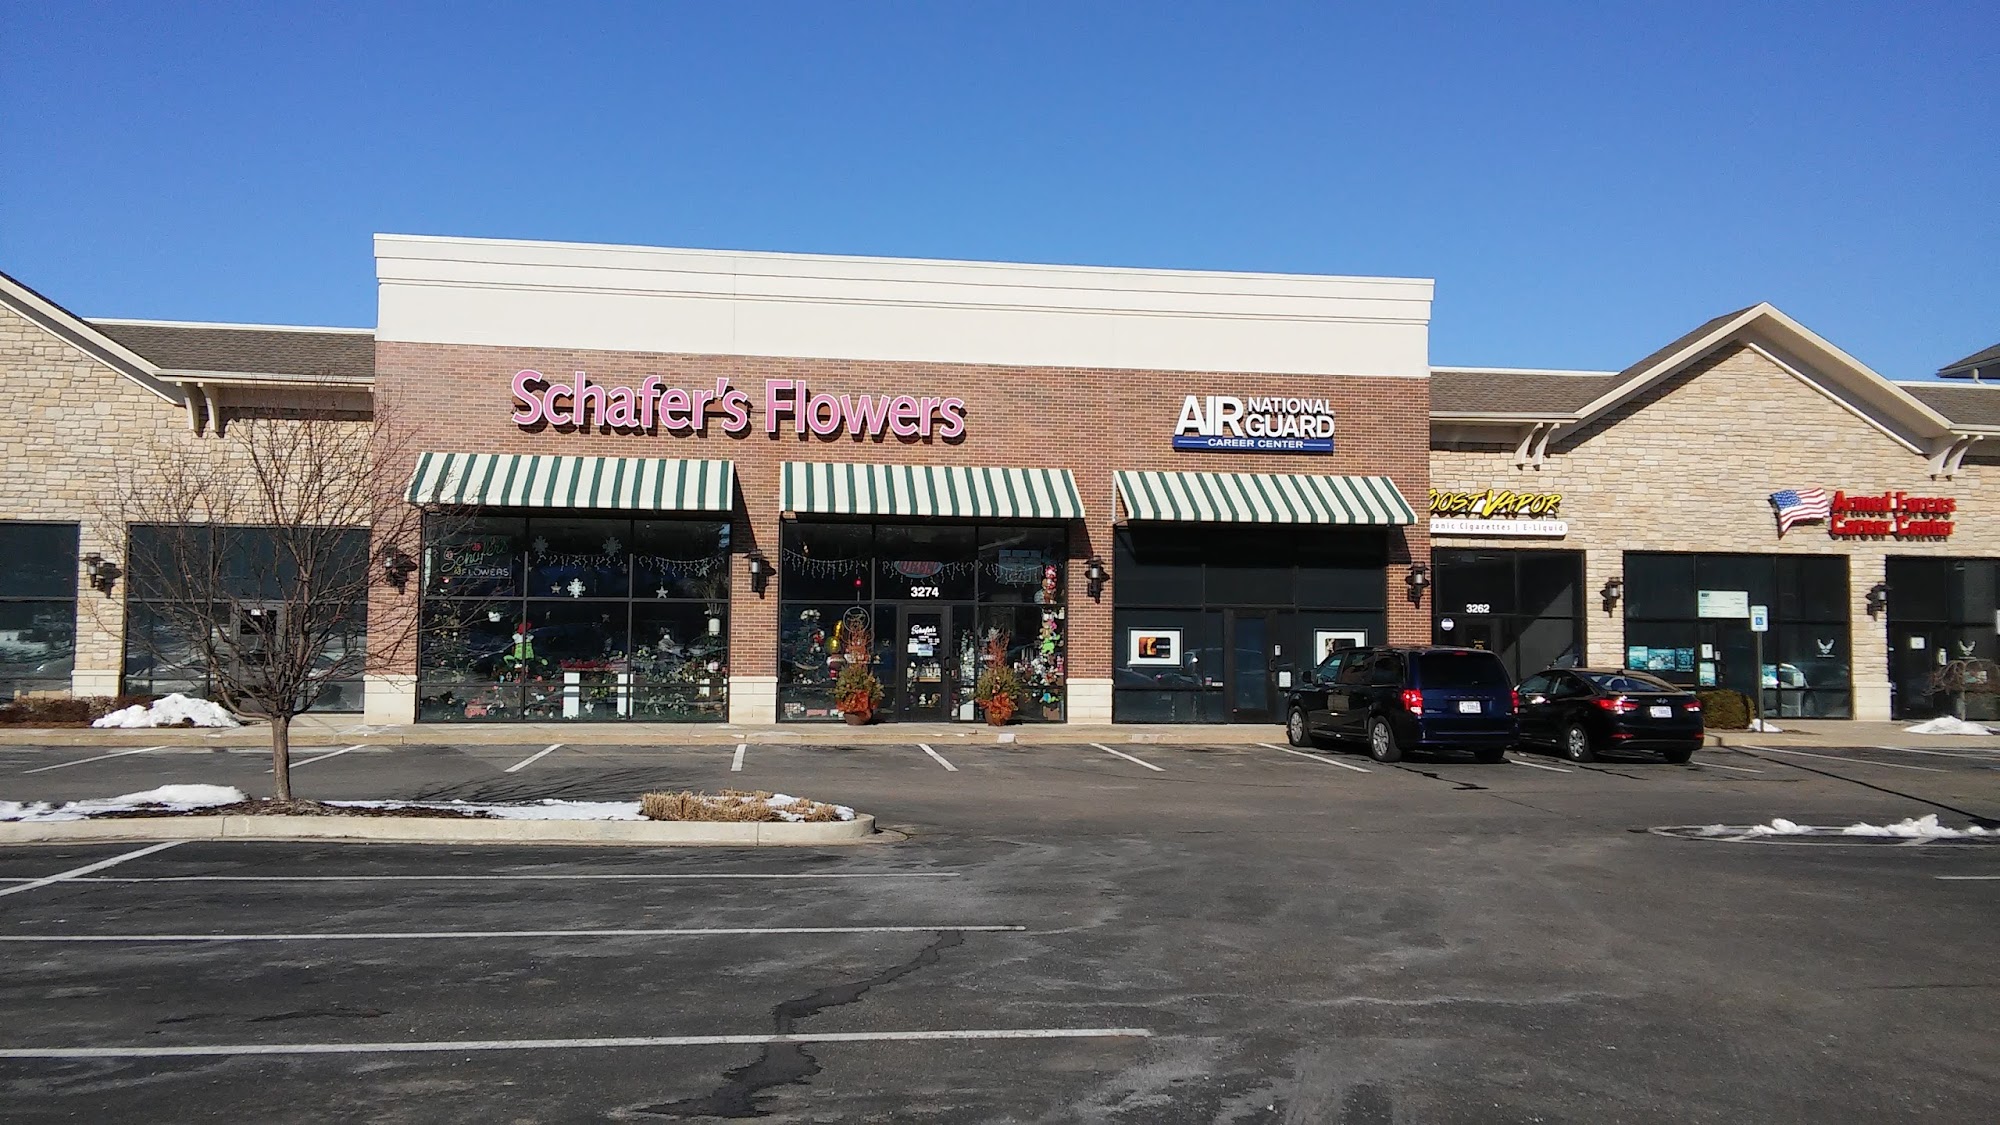 Schafer's Flowers Inc